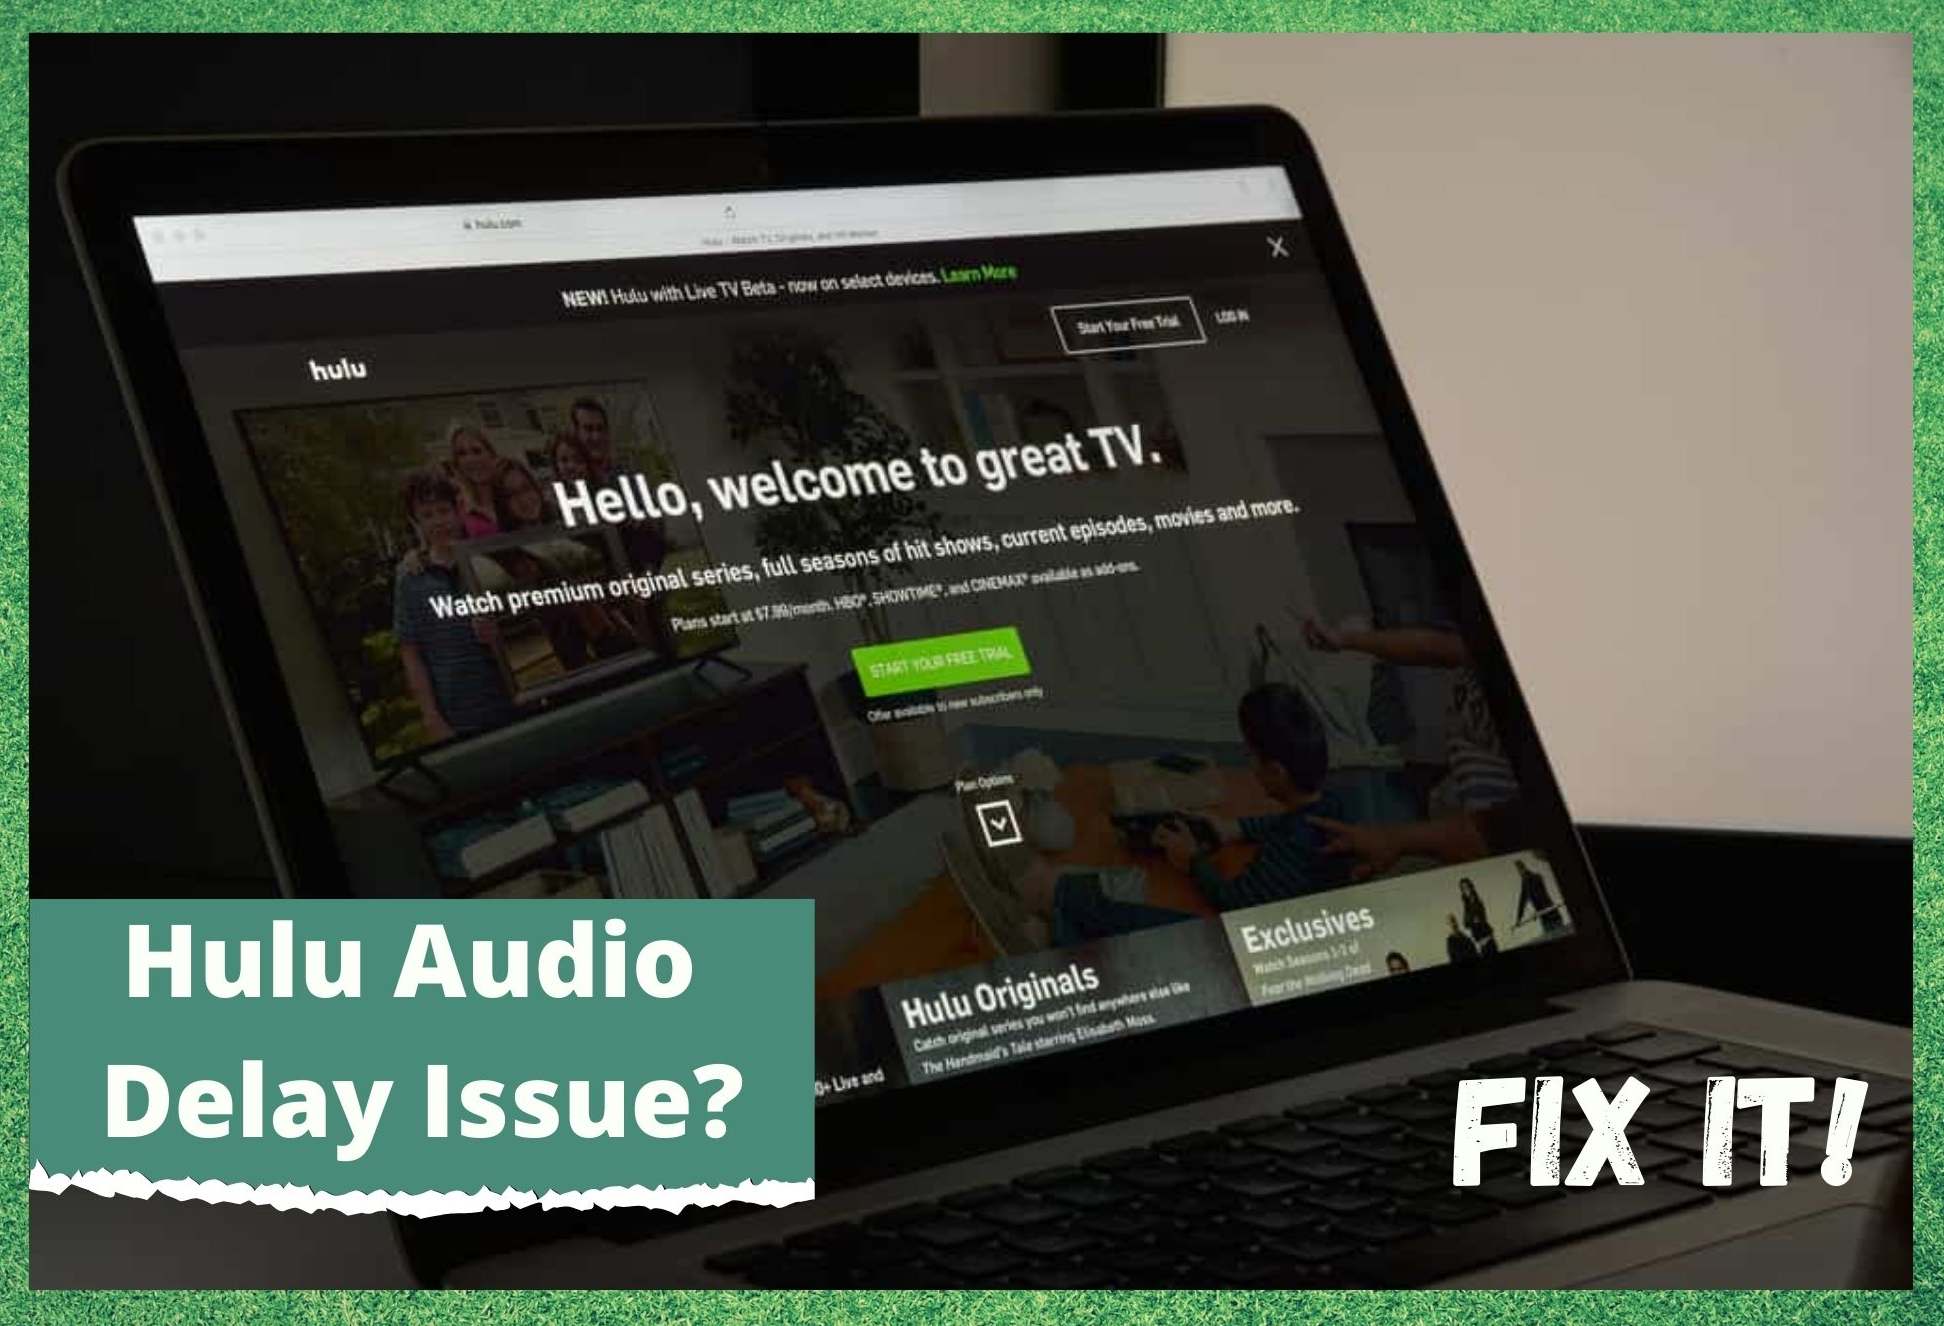 4 tapaa korjata Hulu Audio Delay ongelma